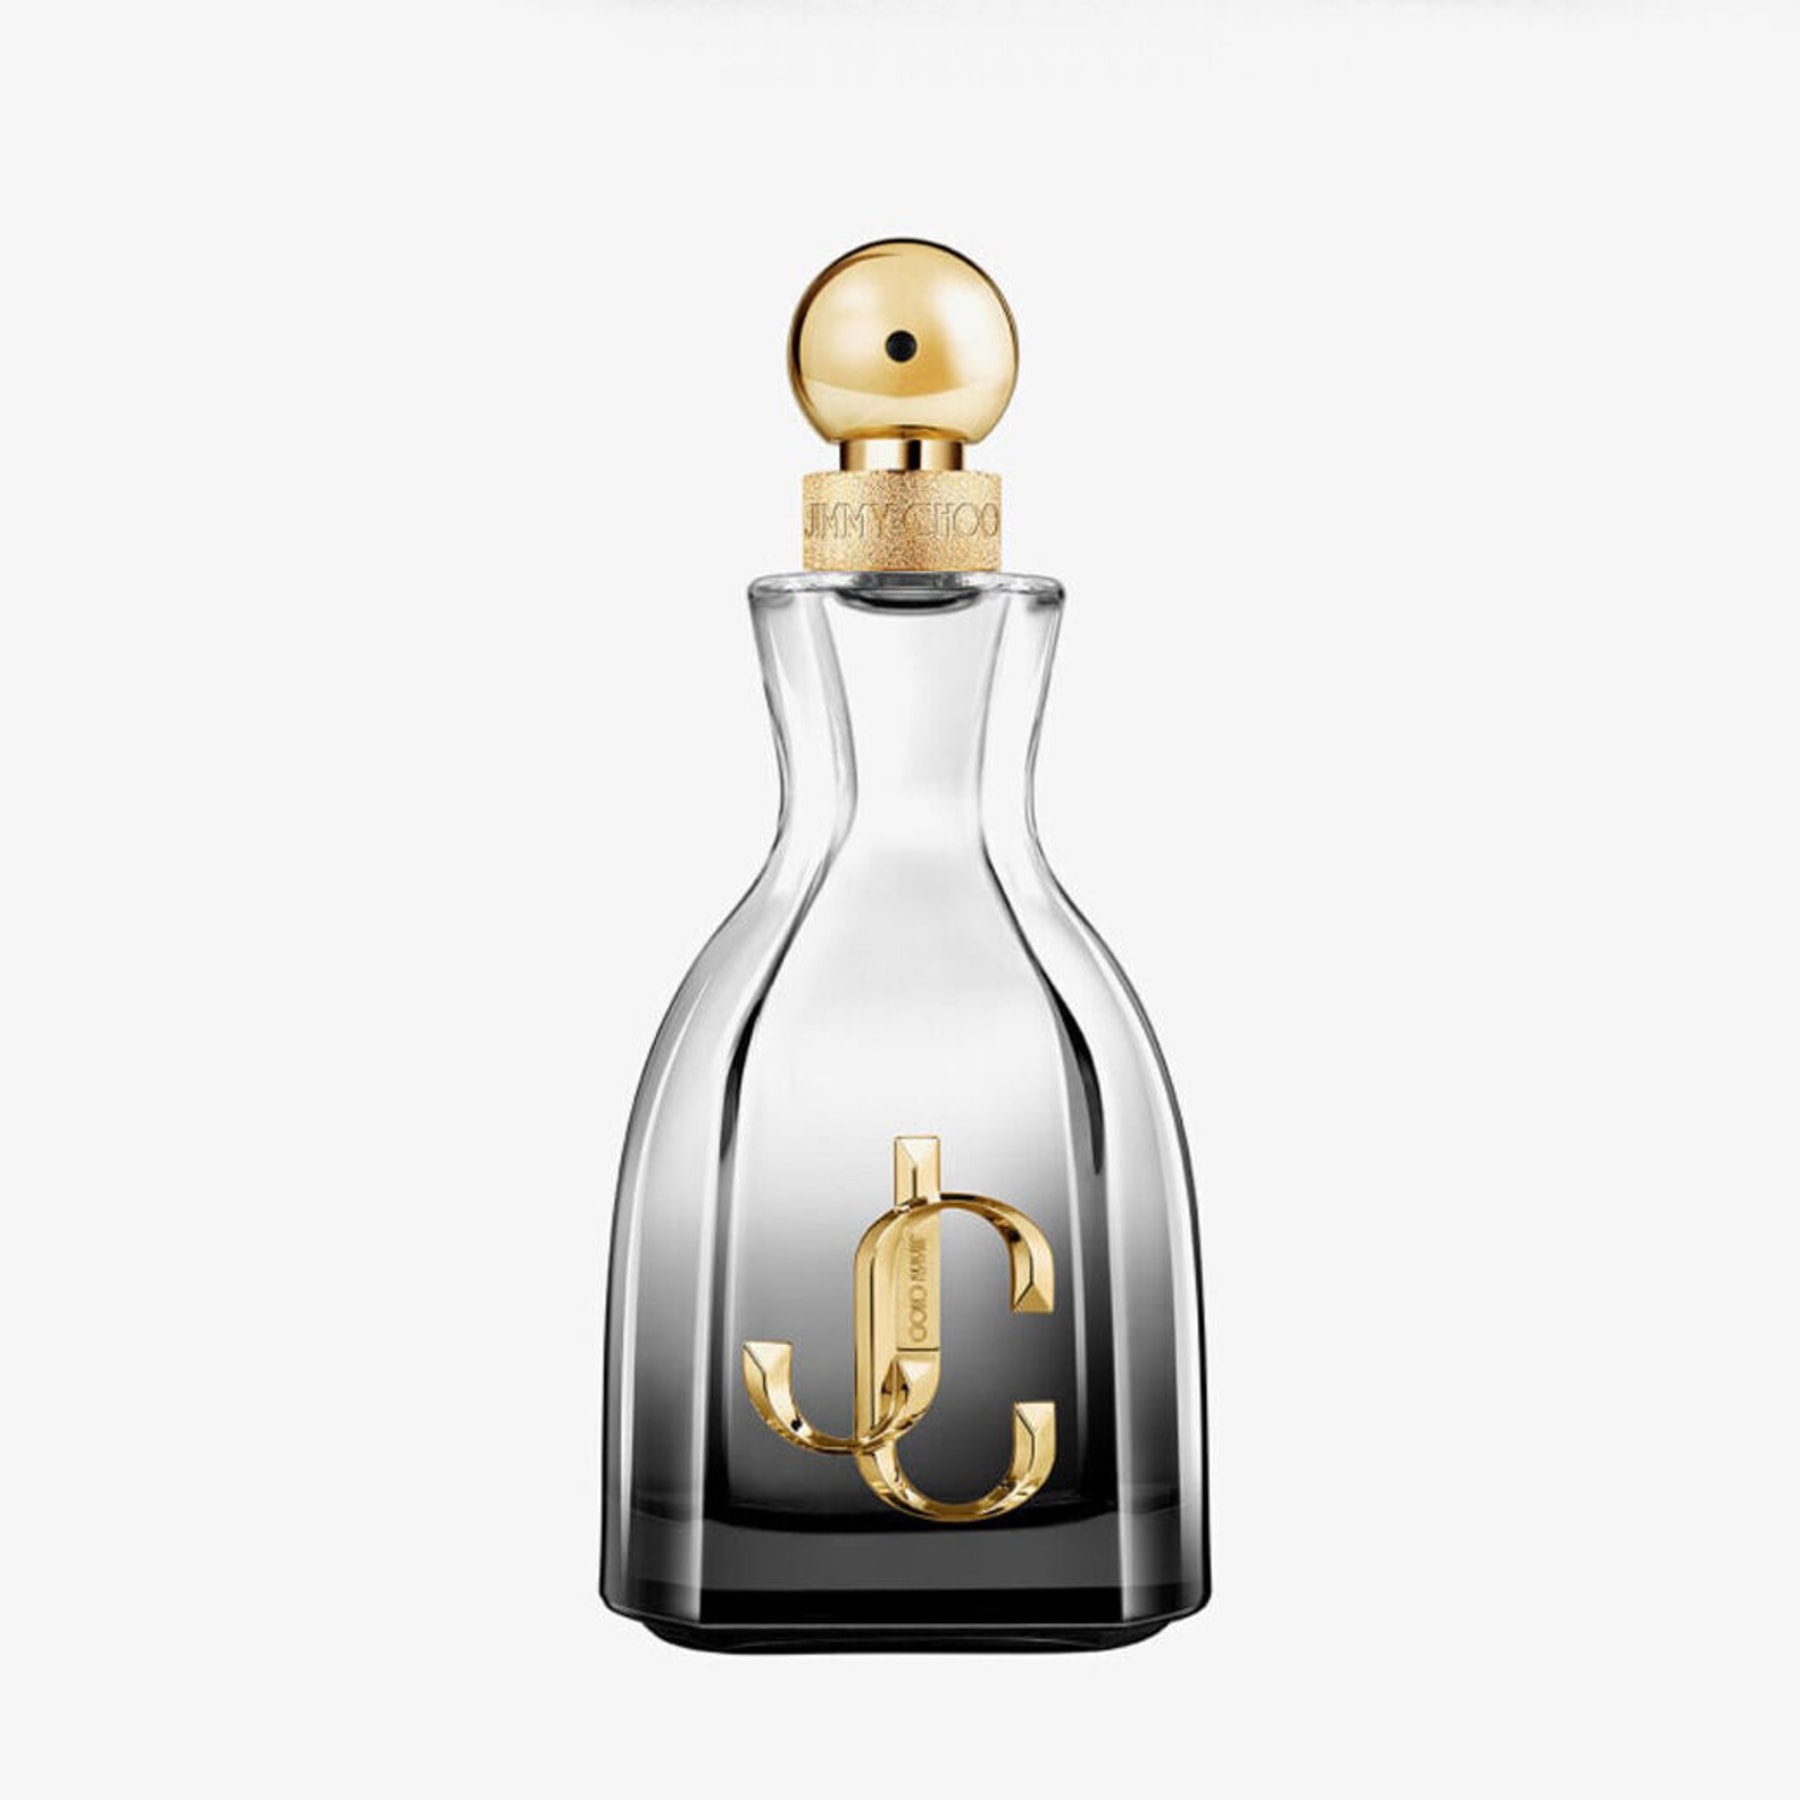 Paris Hilton Handbag Bag Sac Purse Free With Purchase of Fragrance Risqué  Tag | eBay